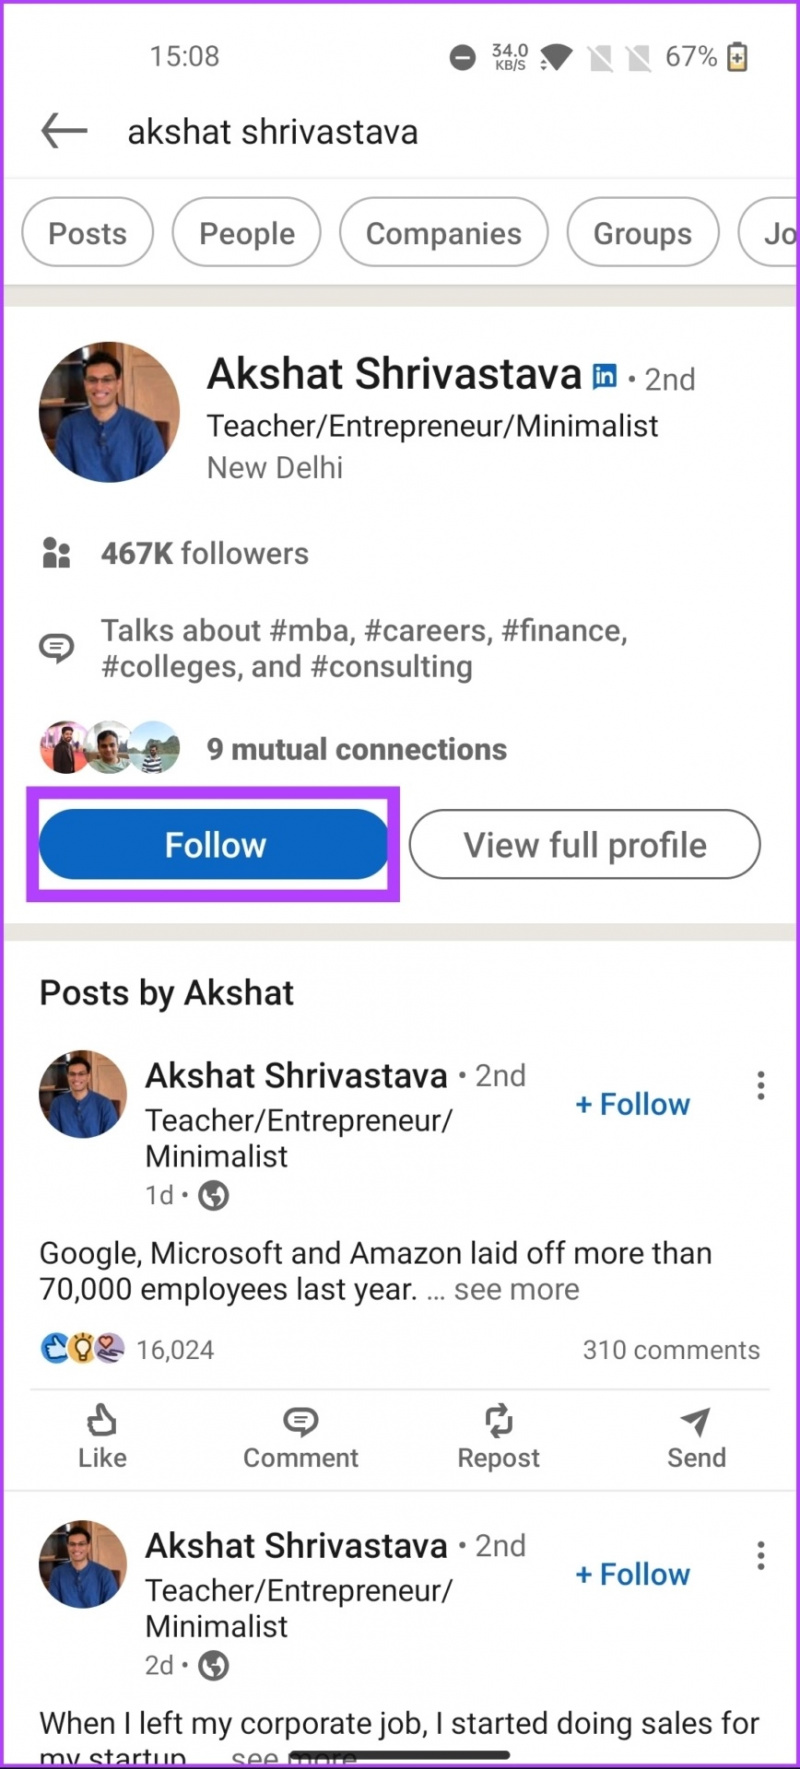   ap den'Connect' or 'Follow' button below their profile details.